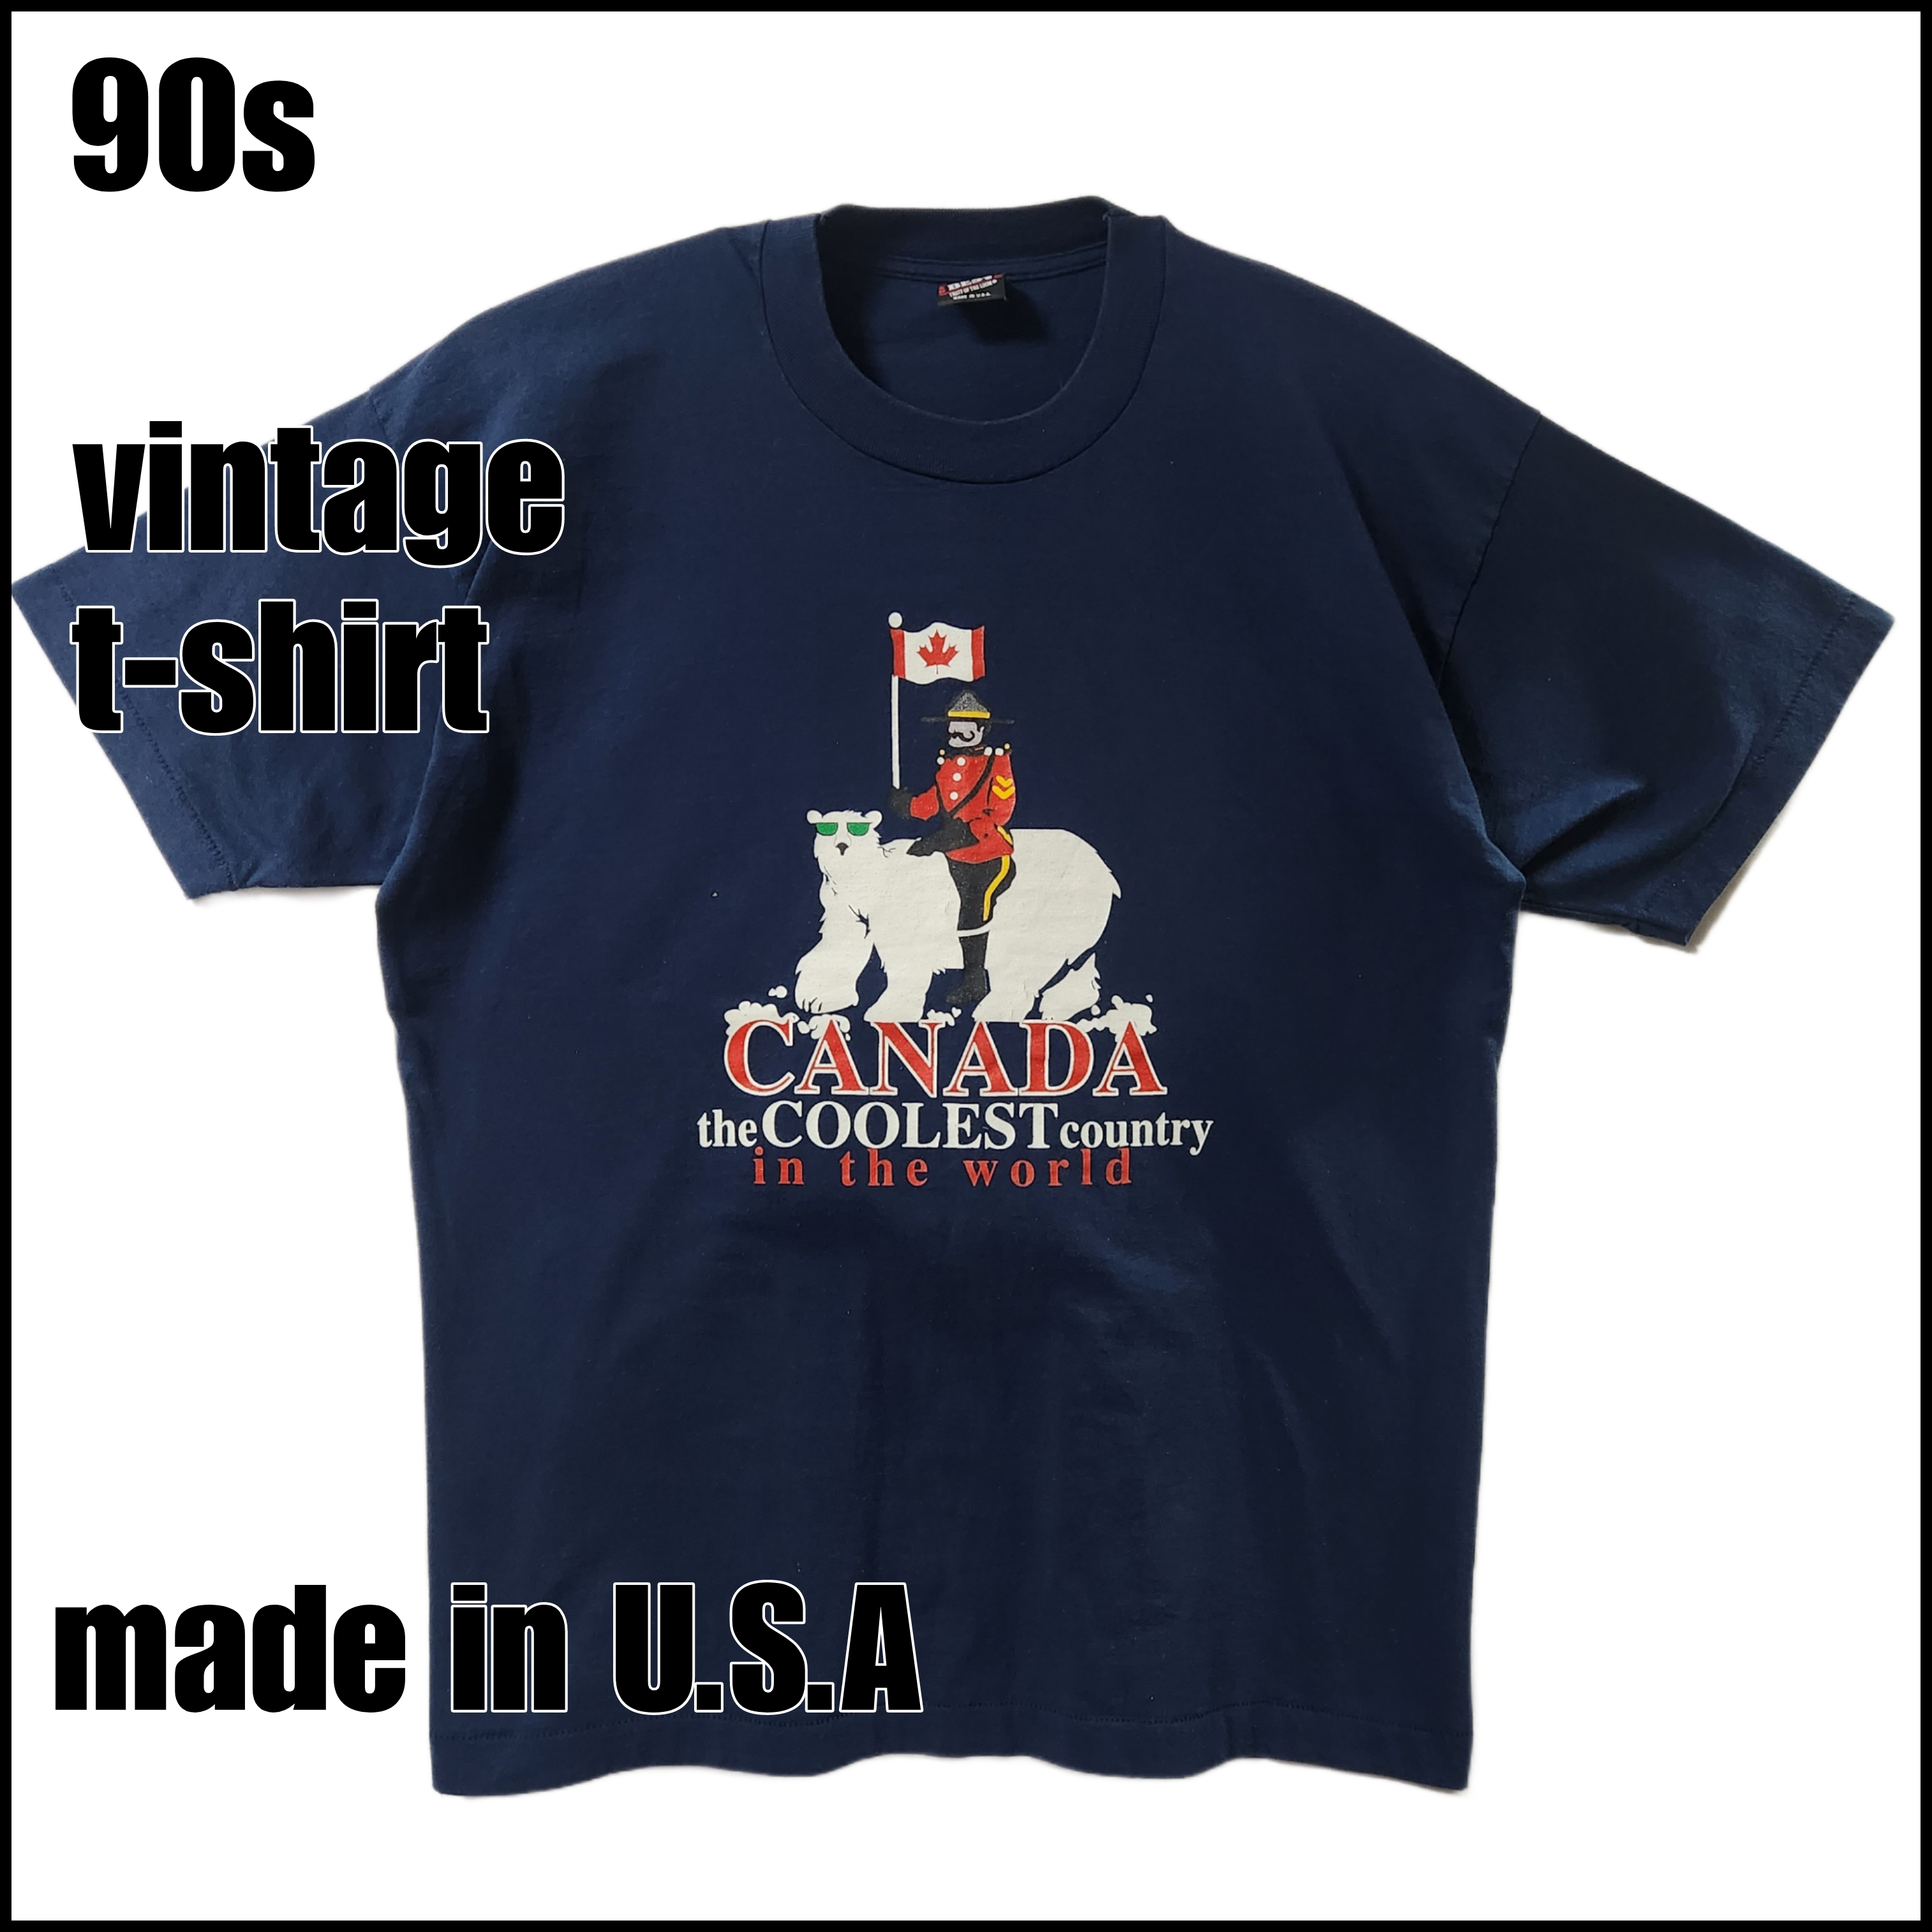 90s SCREEN STARS ヴィンテージ Tシャツ 半袖 USA製 ネイビー サイズXL